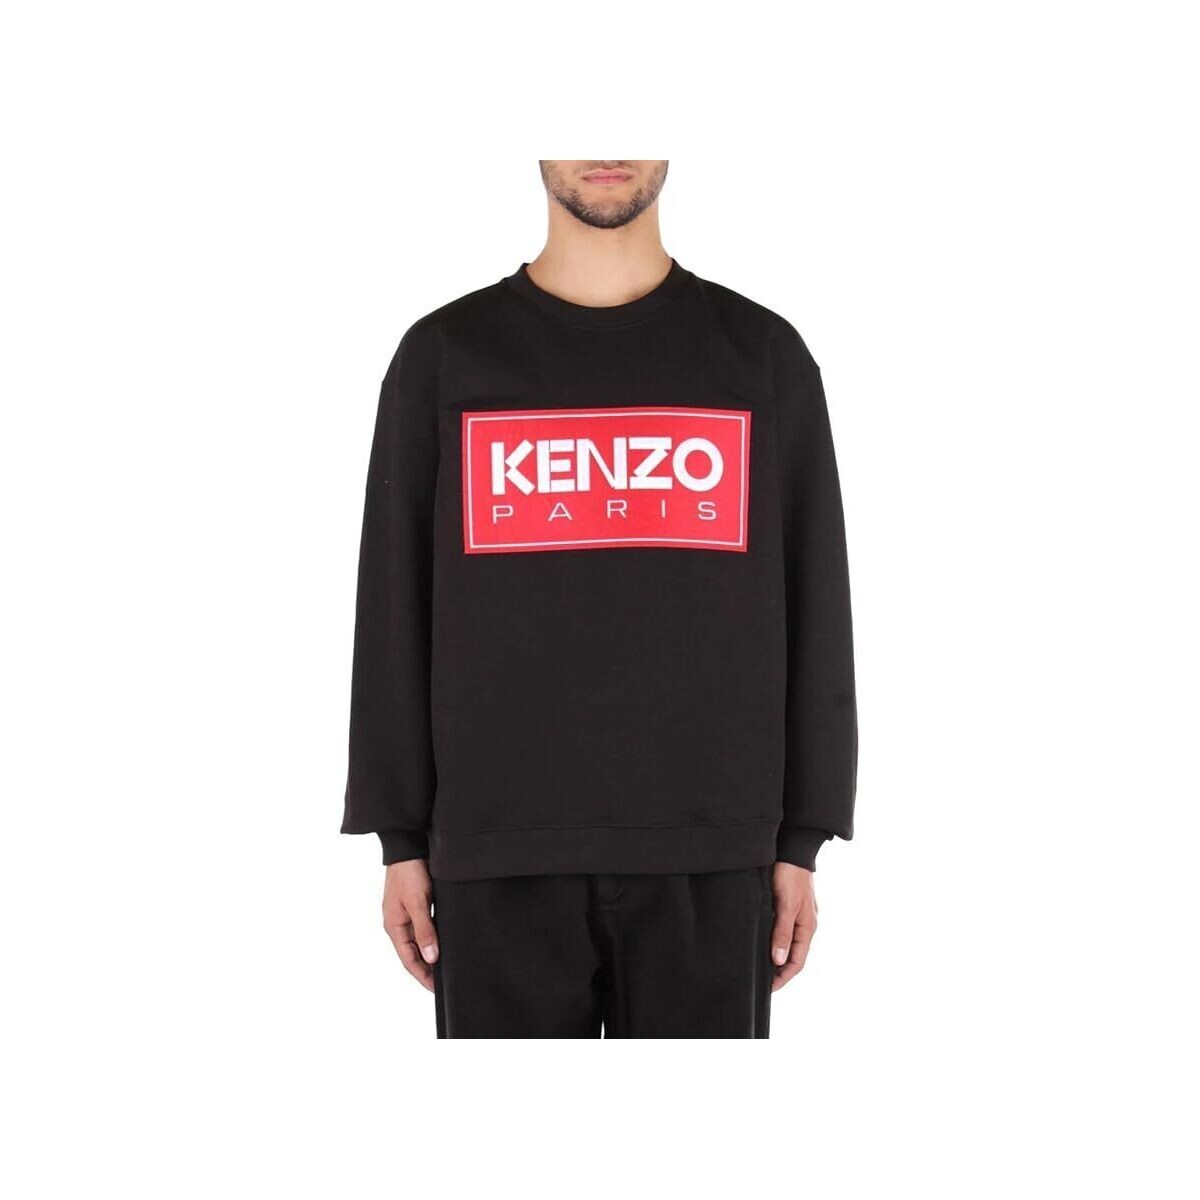 Kenzo  Paris Sweatshirt  Černá